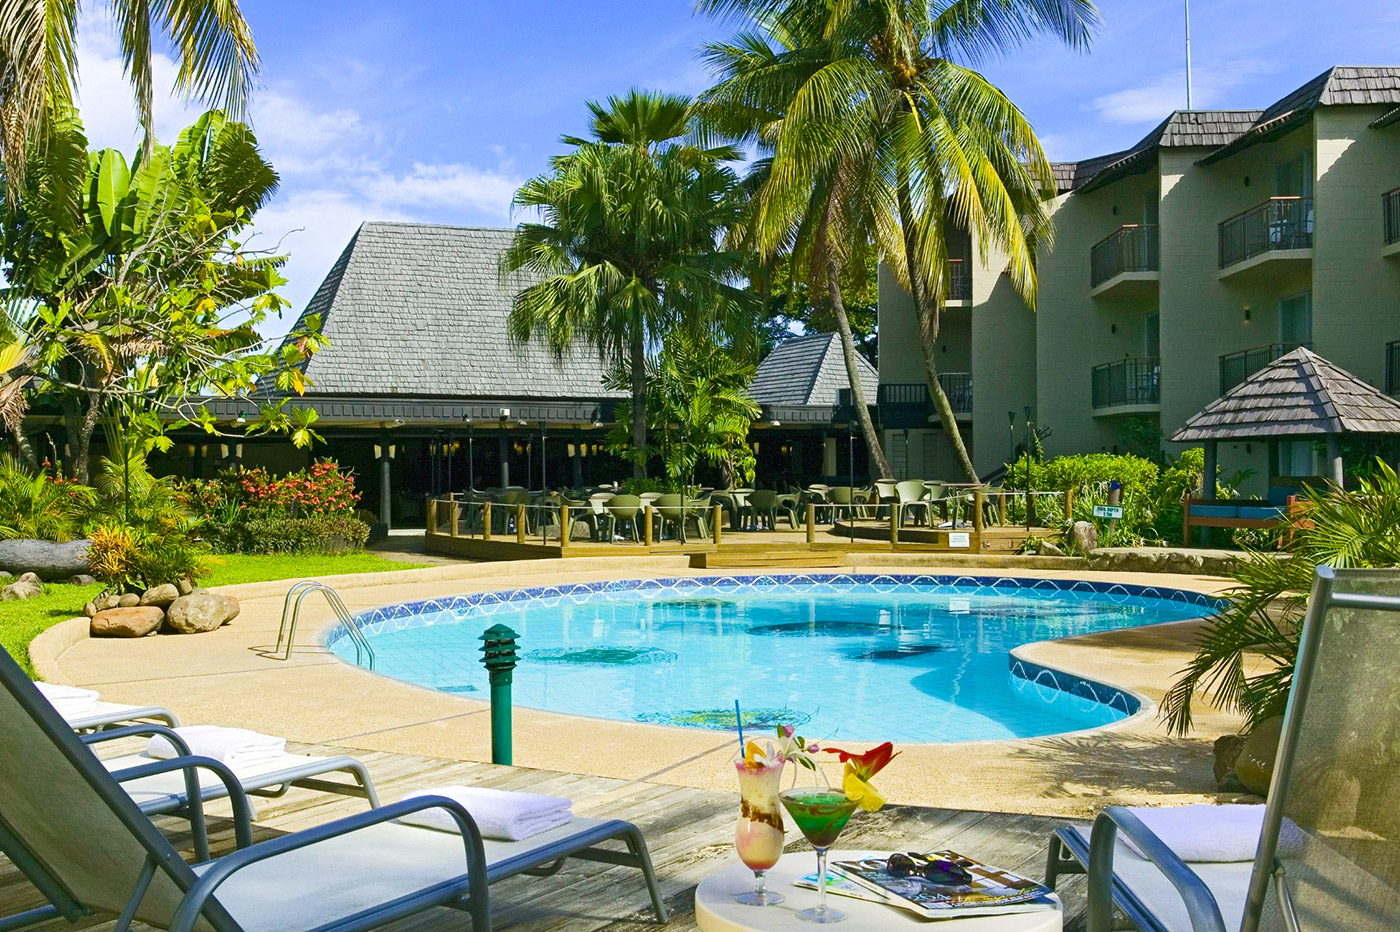 NADI, Port DENARAU, LAUTOKA Hotels & Resorts | "Pacific Destination Center"